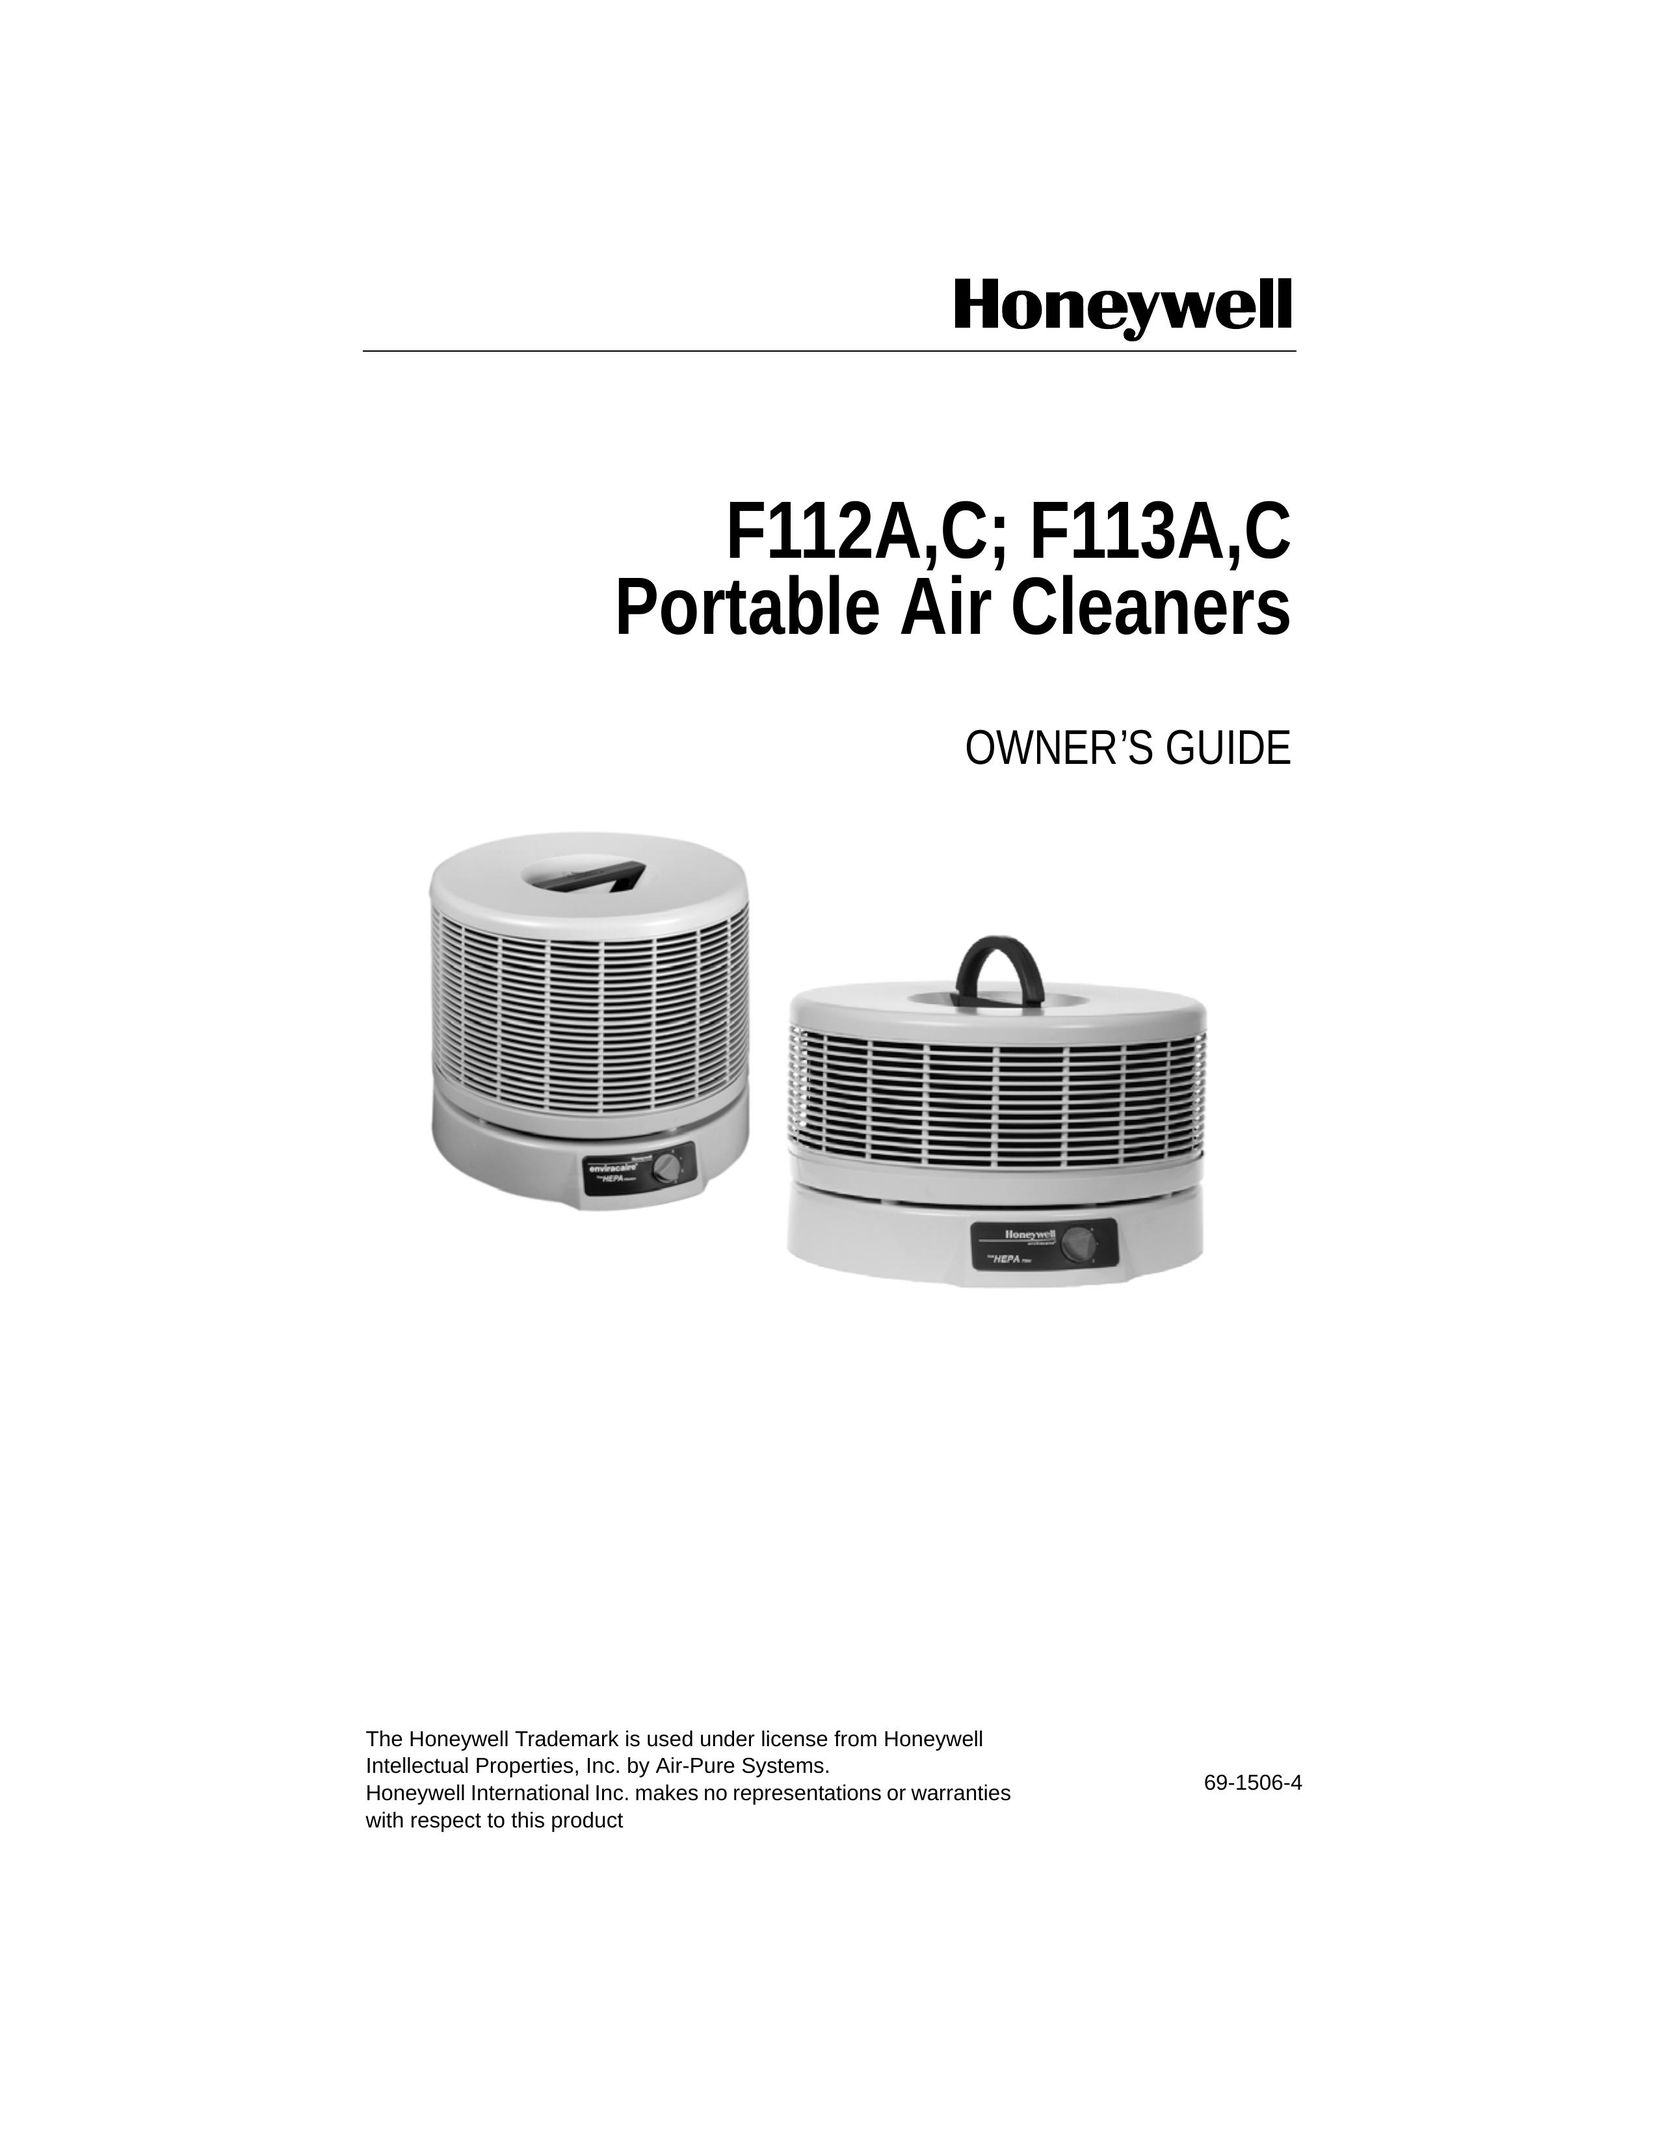 Honeywell F112C Air Cleaner User Manual